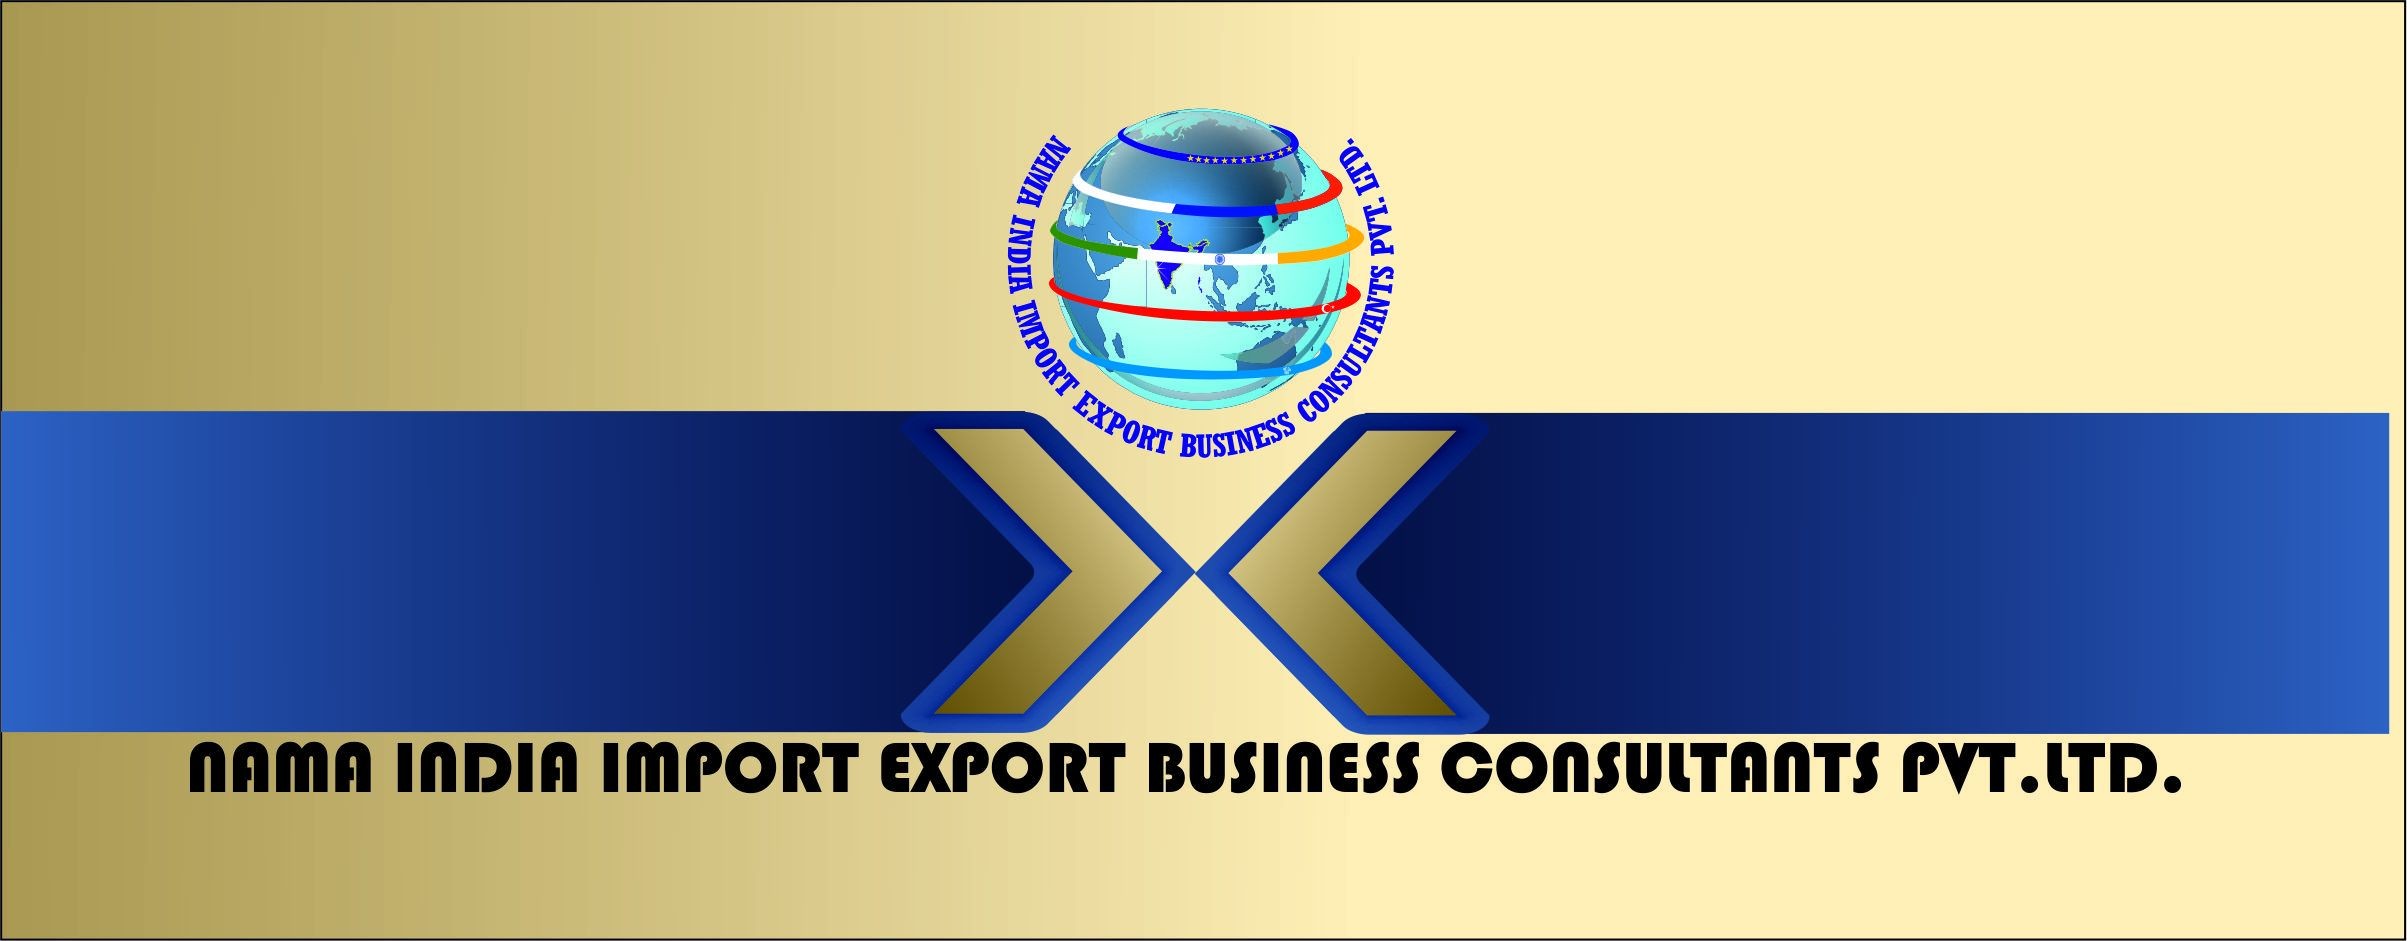 Nama India Import Export Business Consultants.Pvt.Ltd.